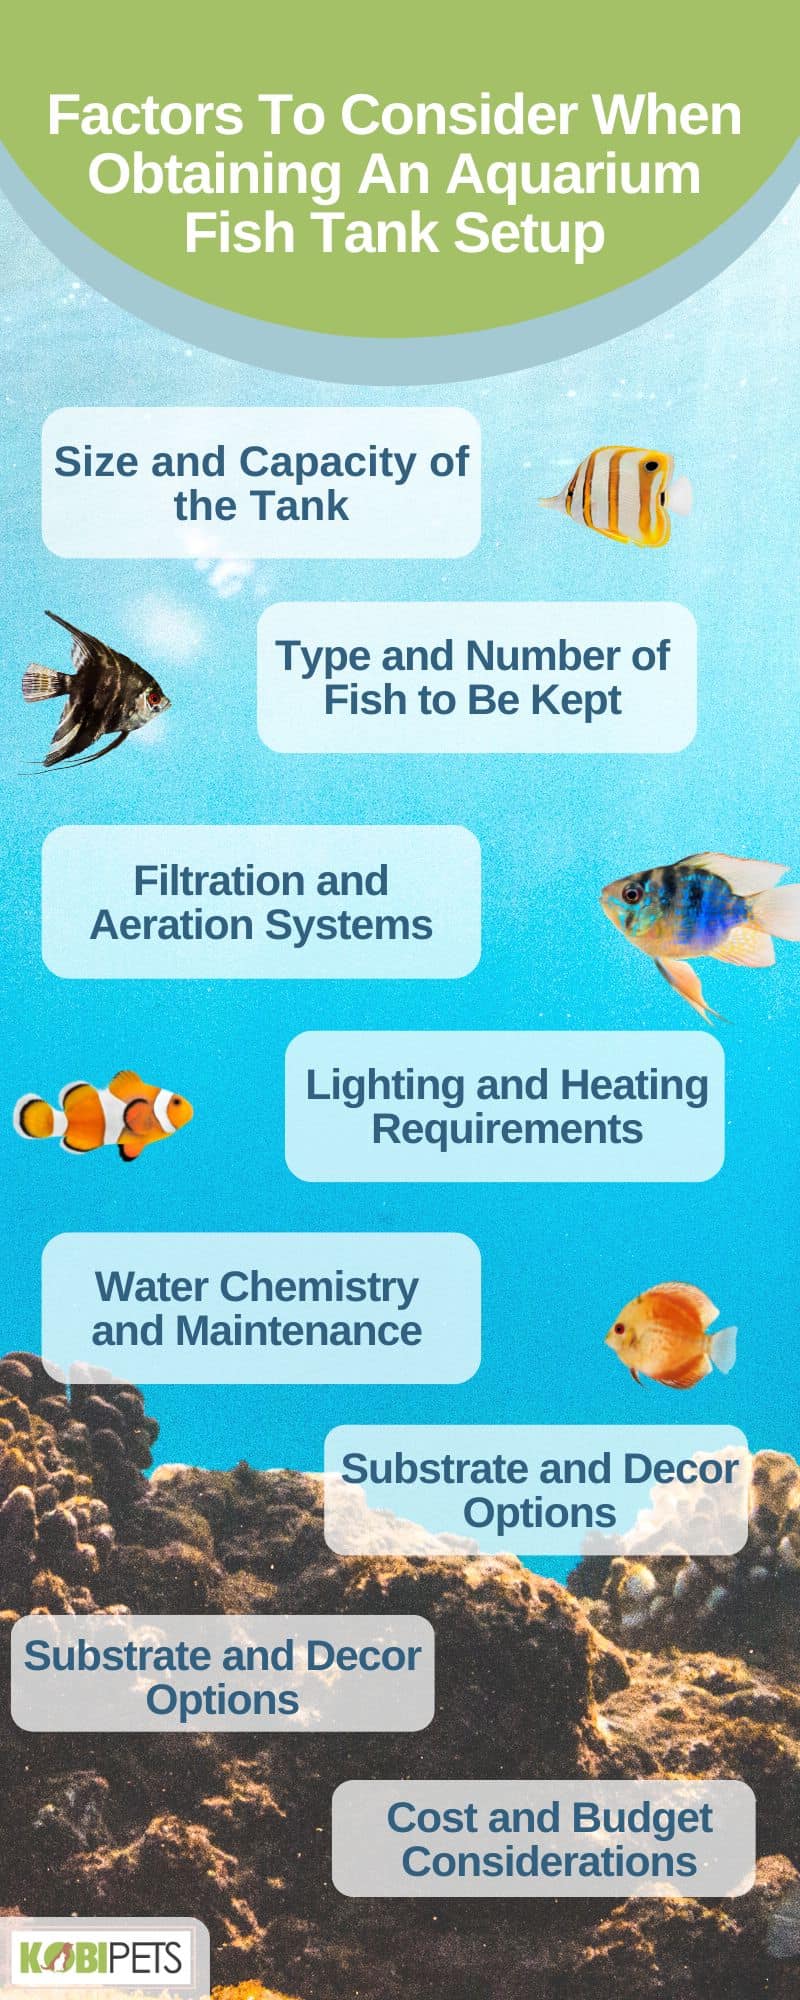 Factors To Consider When Obtaining An Aquarium Fish Tank Setup